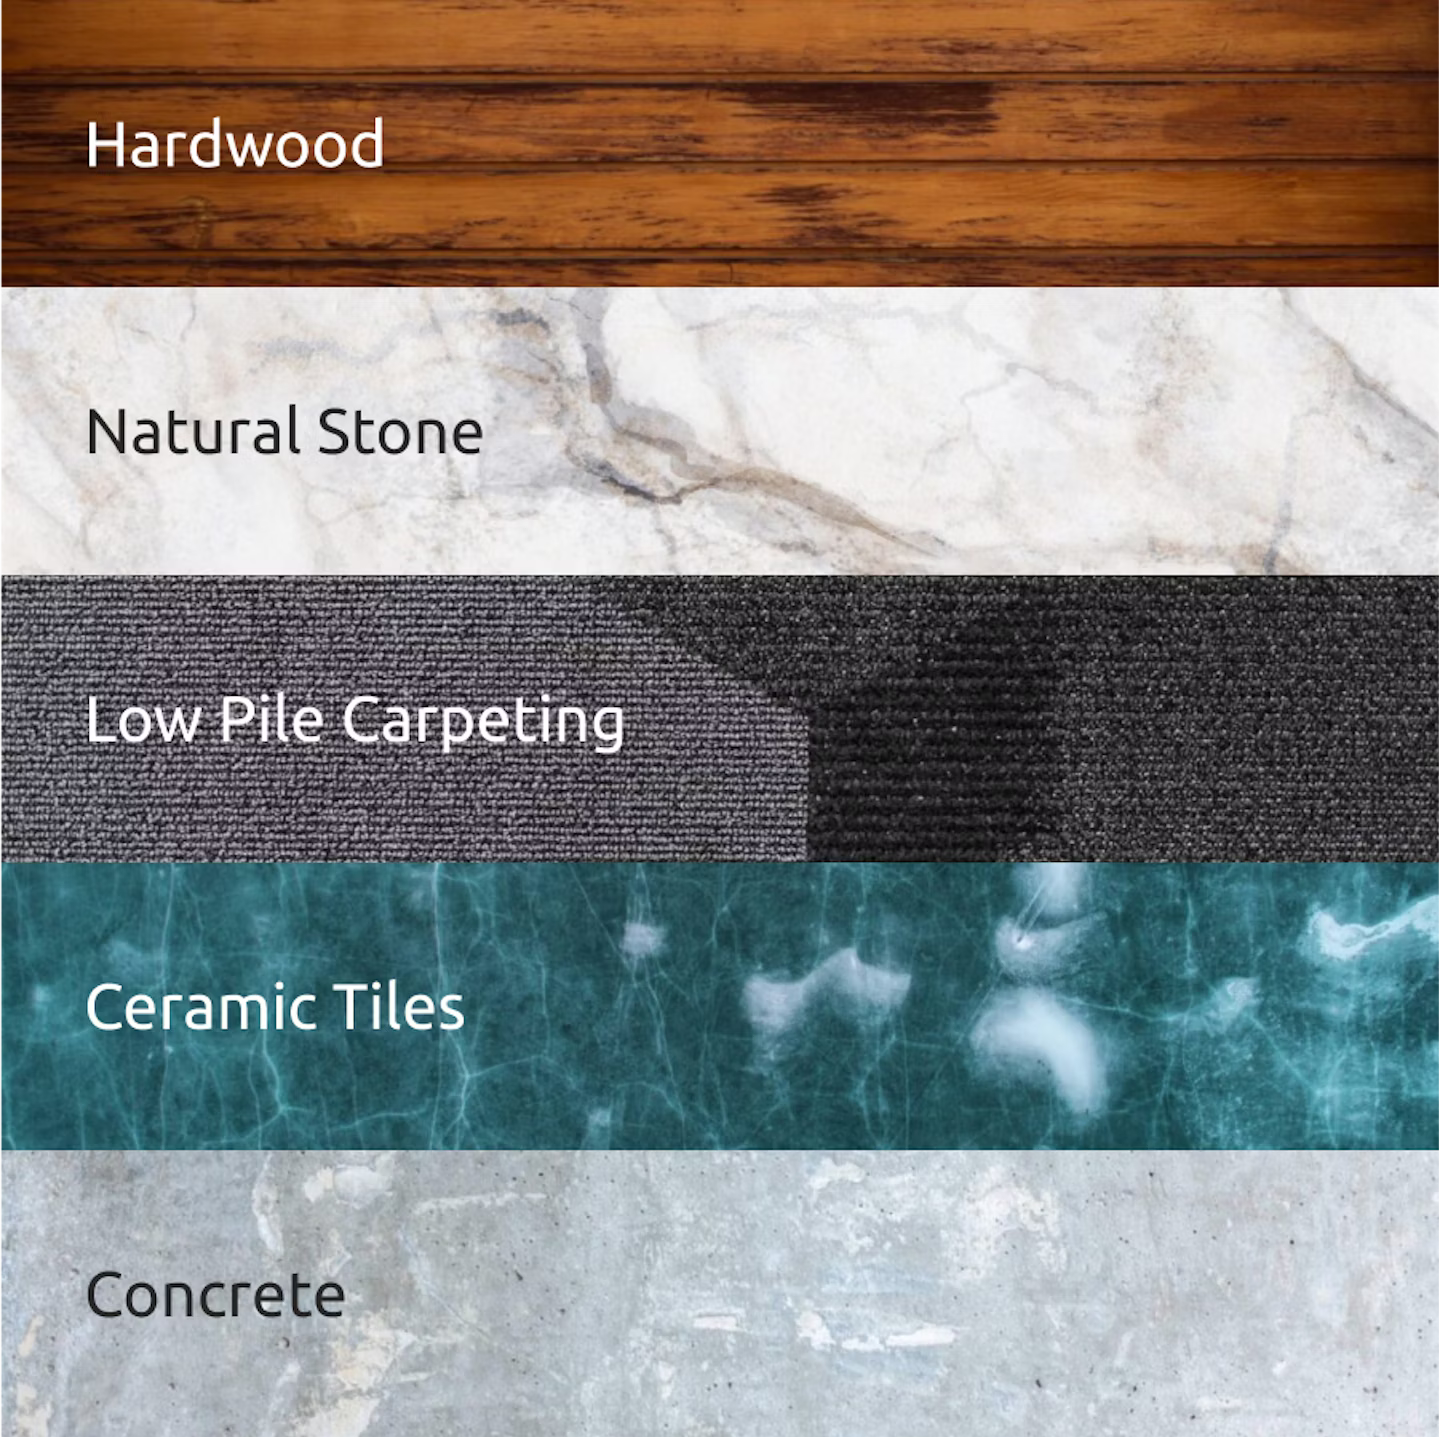 Cleans most floor types: hardwood, natural stone, low pile carpeting, ceramic tiles, concrete